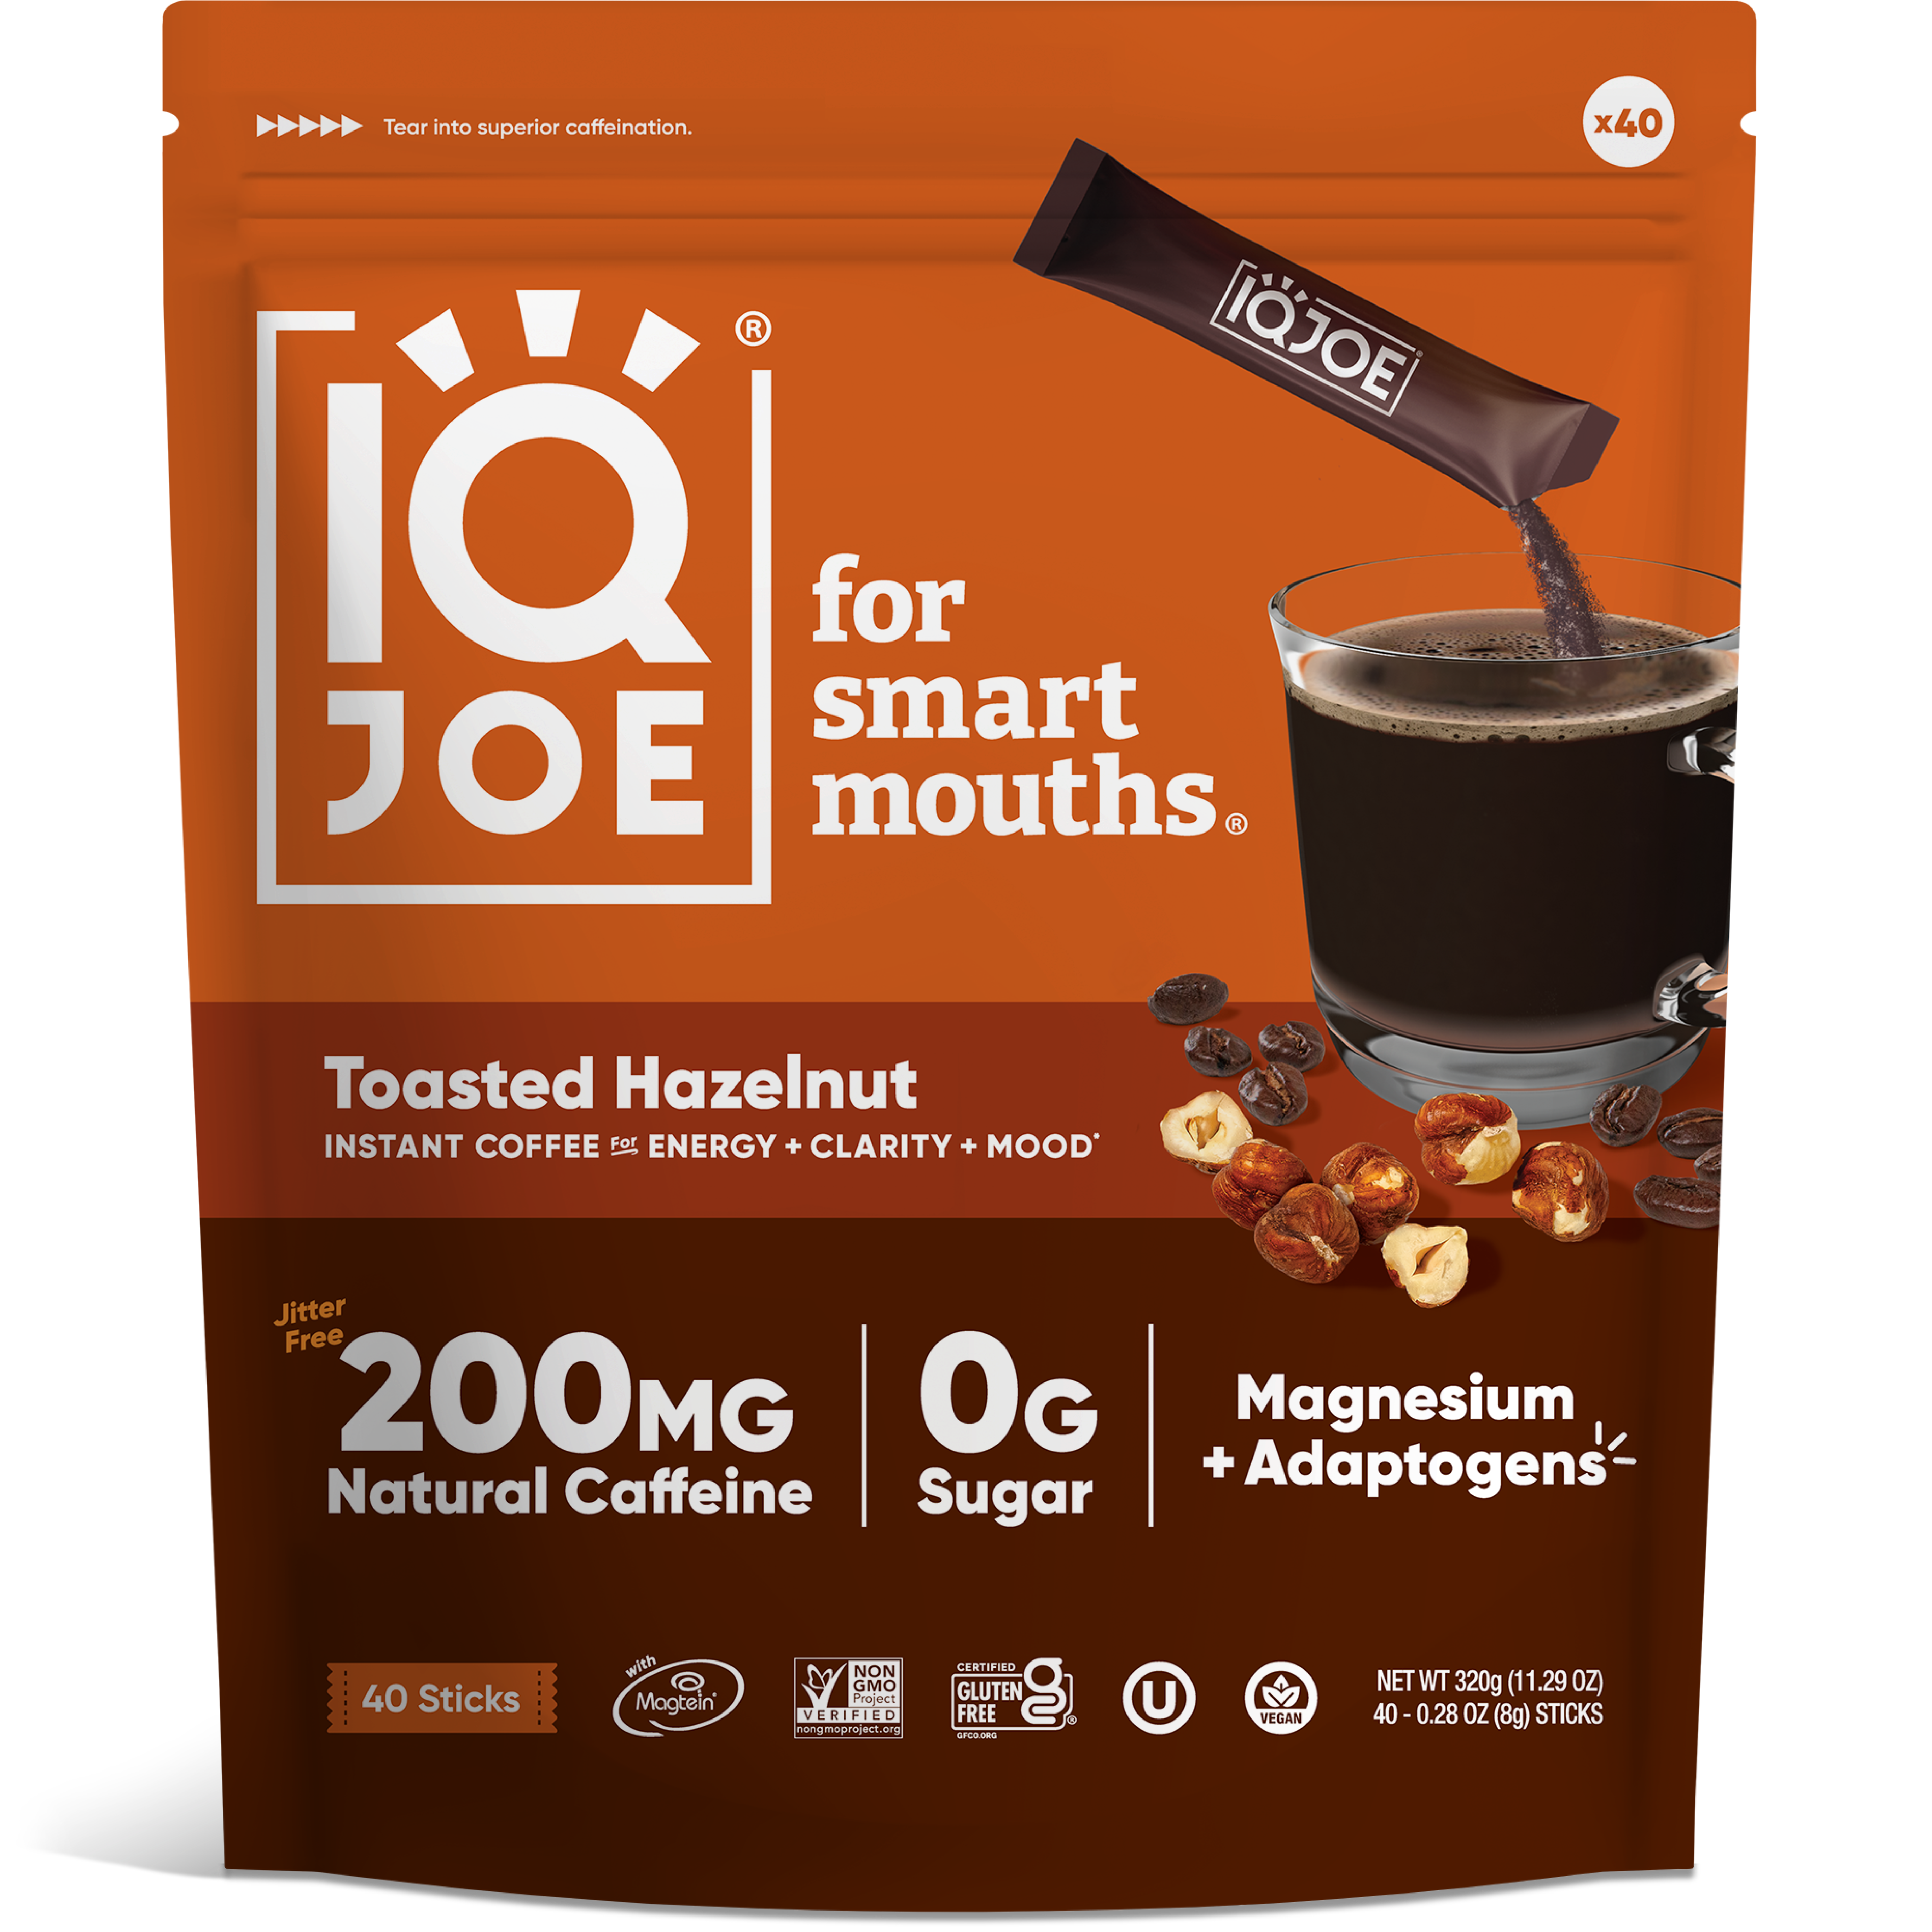 IQJOE Toasted Hazelnut - Lion's Mane Mushroom Coffee with Magnesium. Nootropic Coffee, Jitter-Free Caffeine.